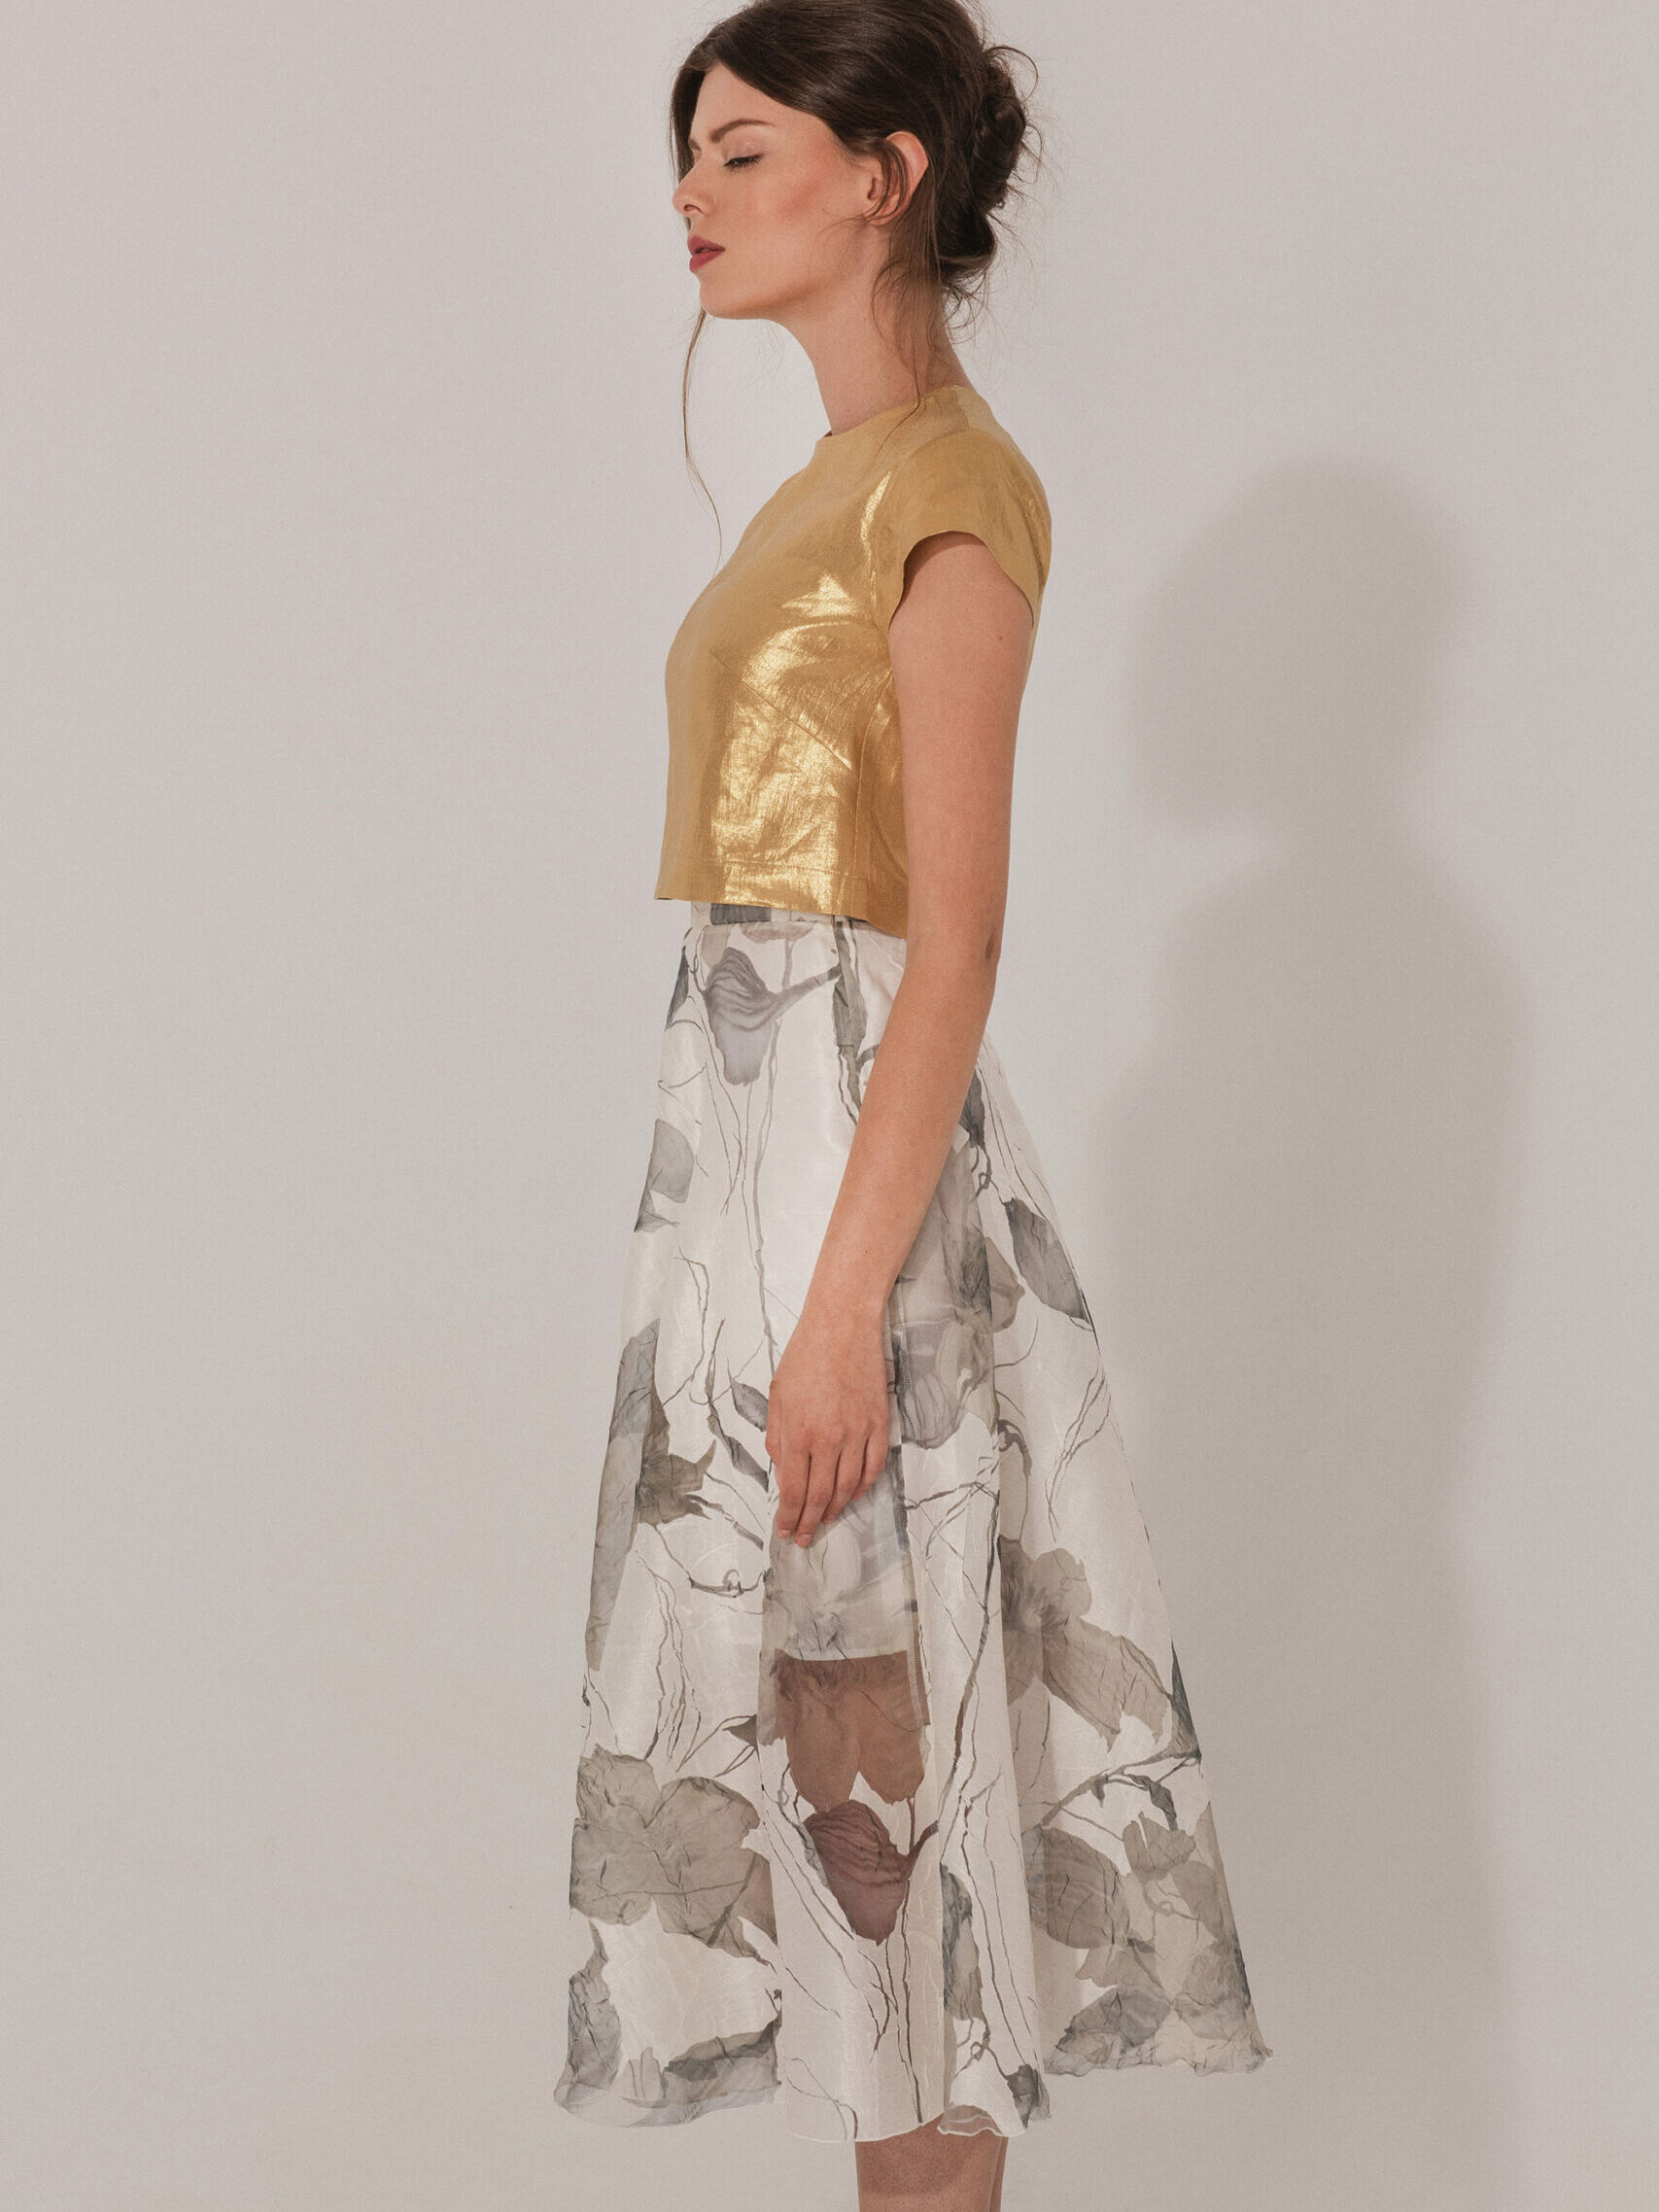 Half circle skirt with transparent flowers side scaled uai • Sassa Björg